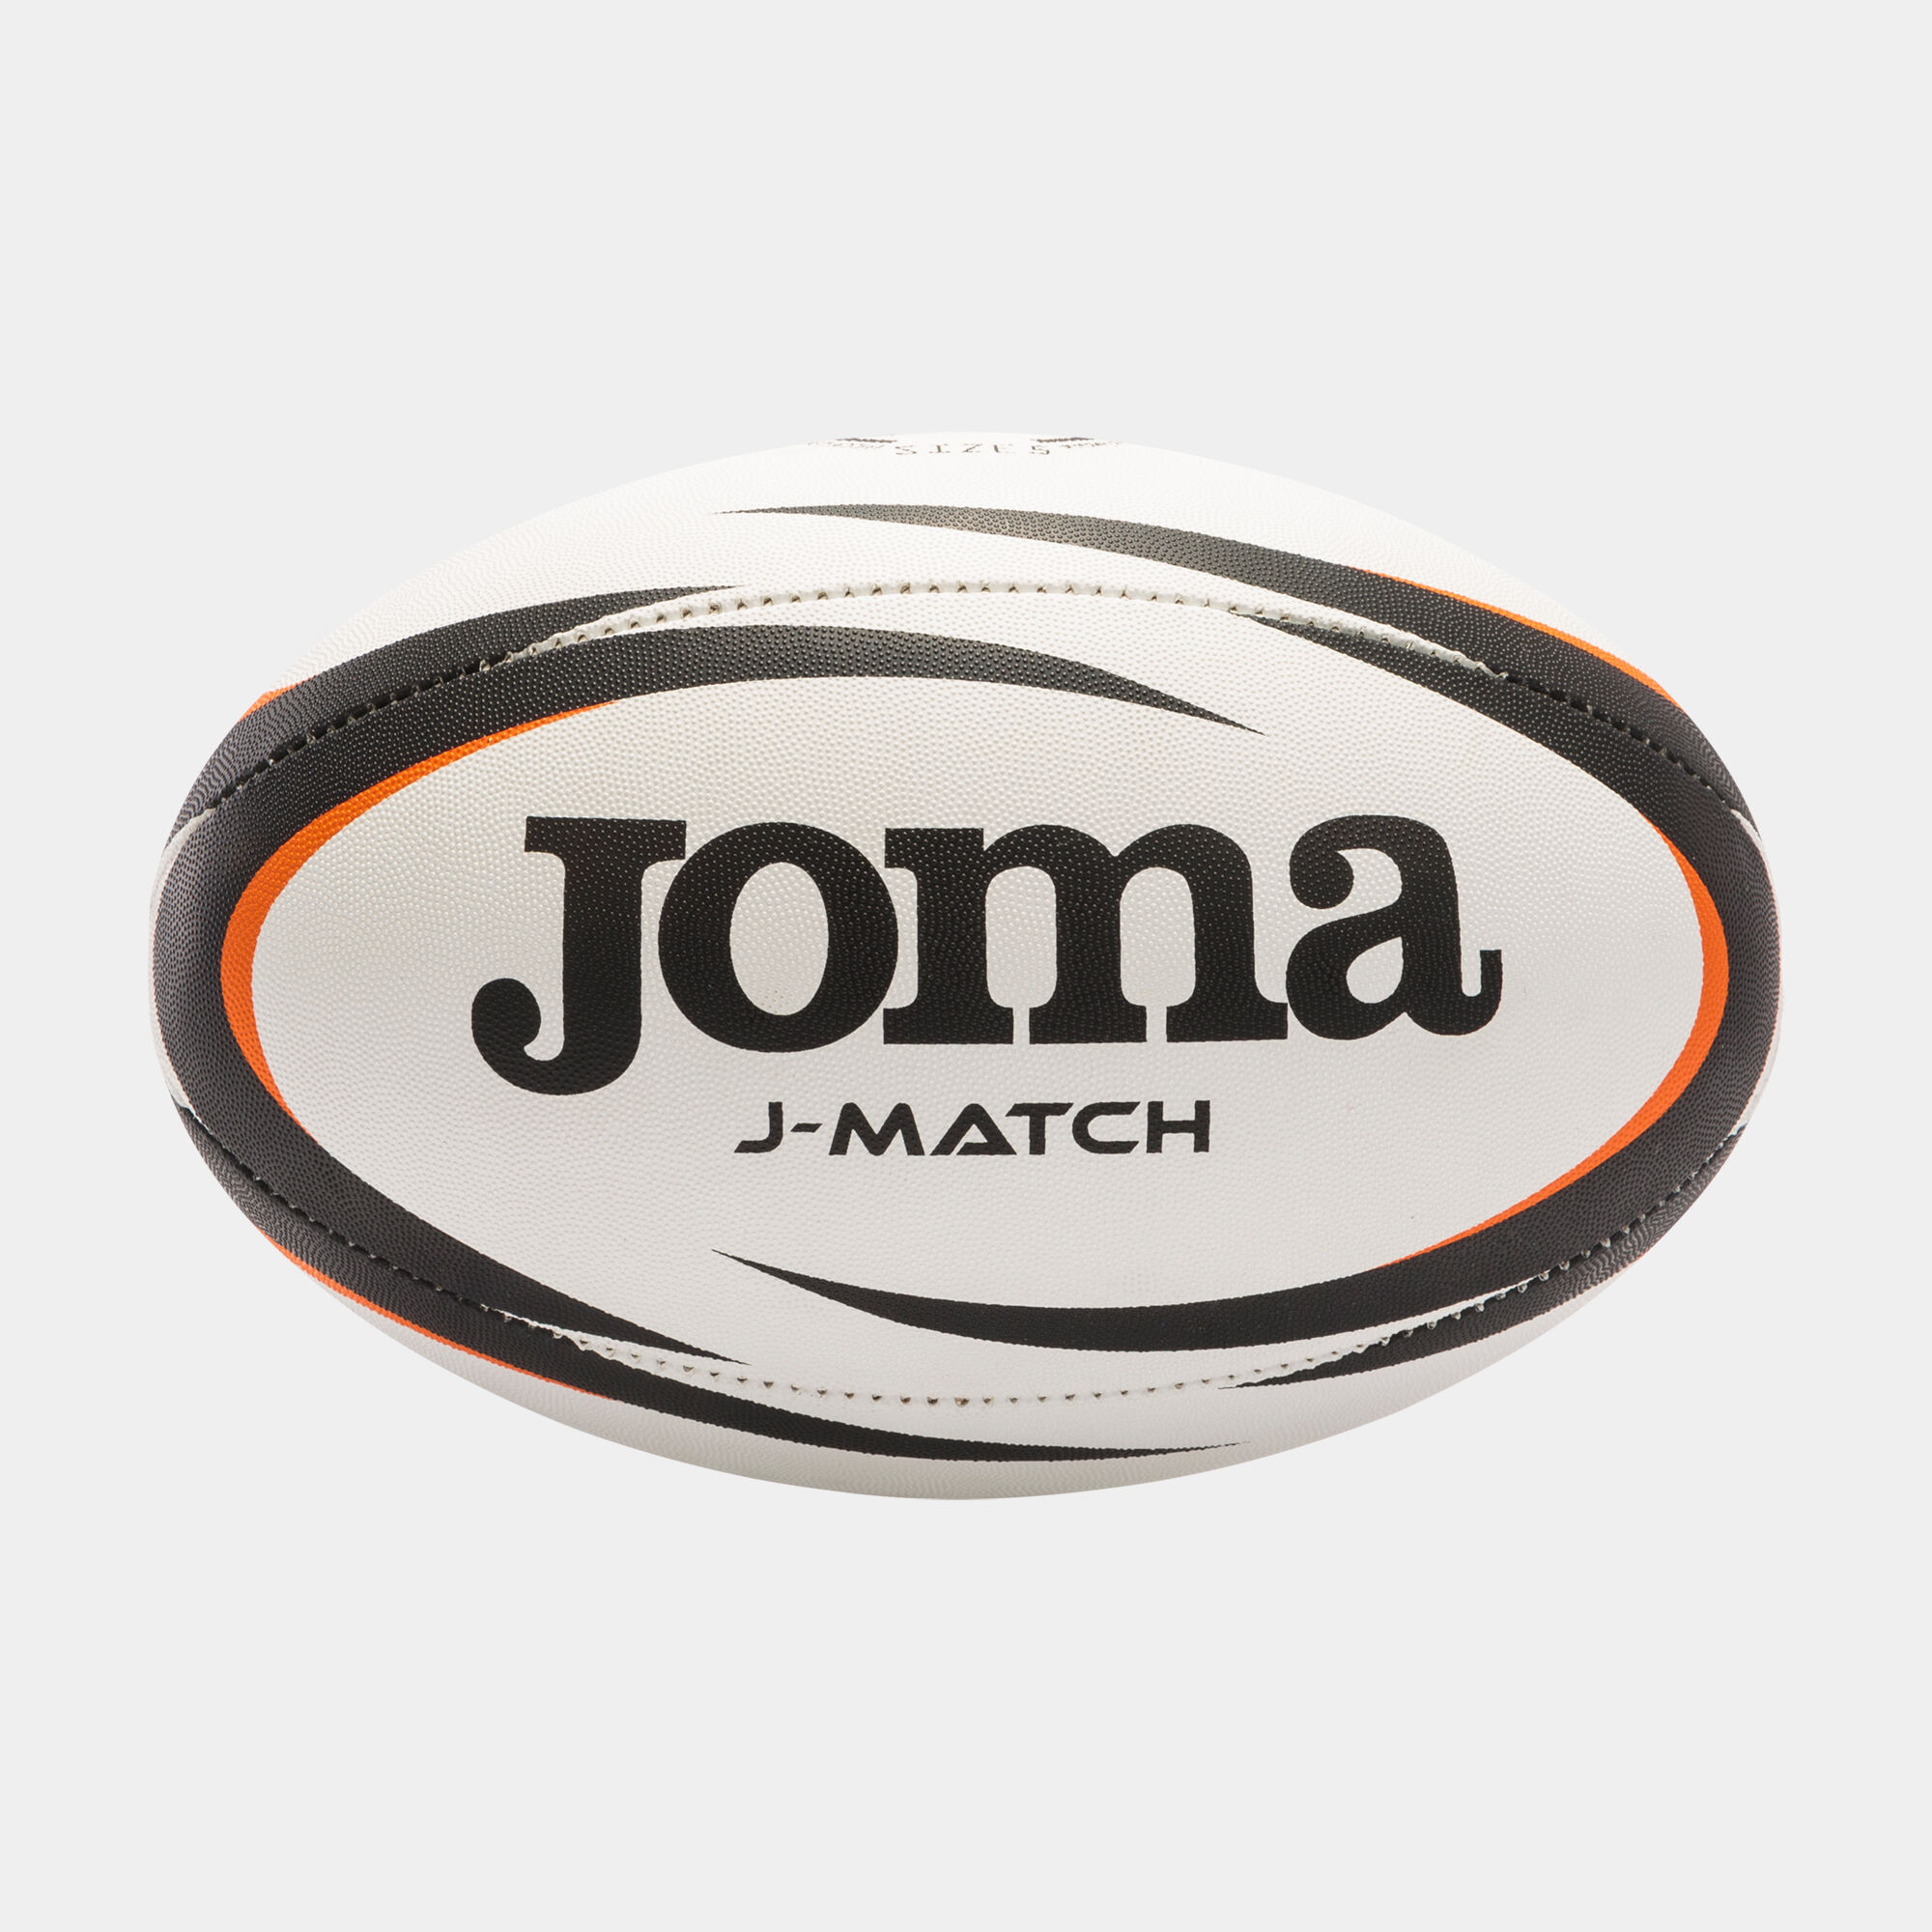 Rugby ball J-Match white black